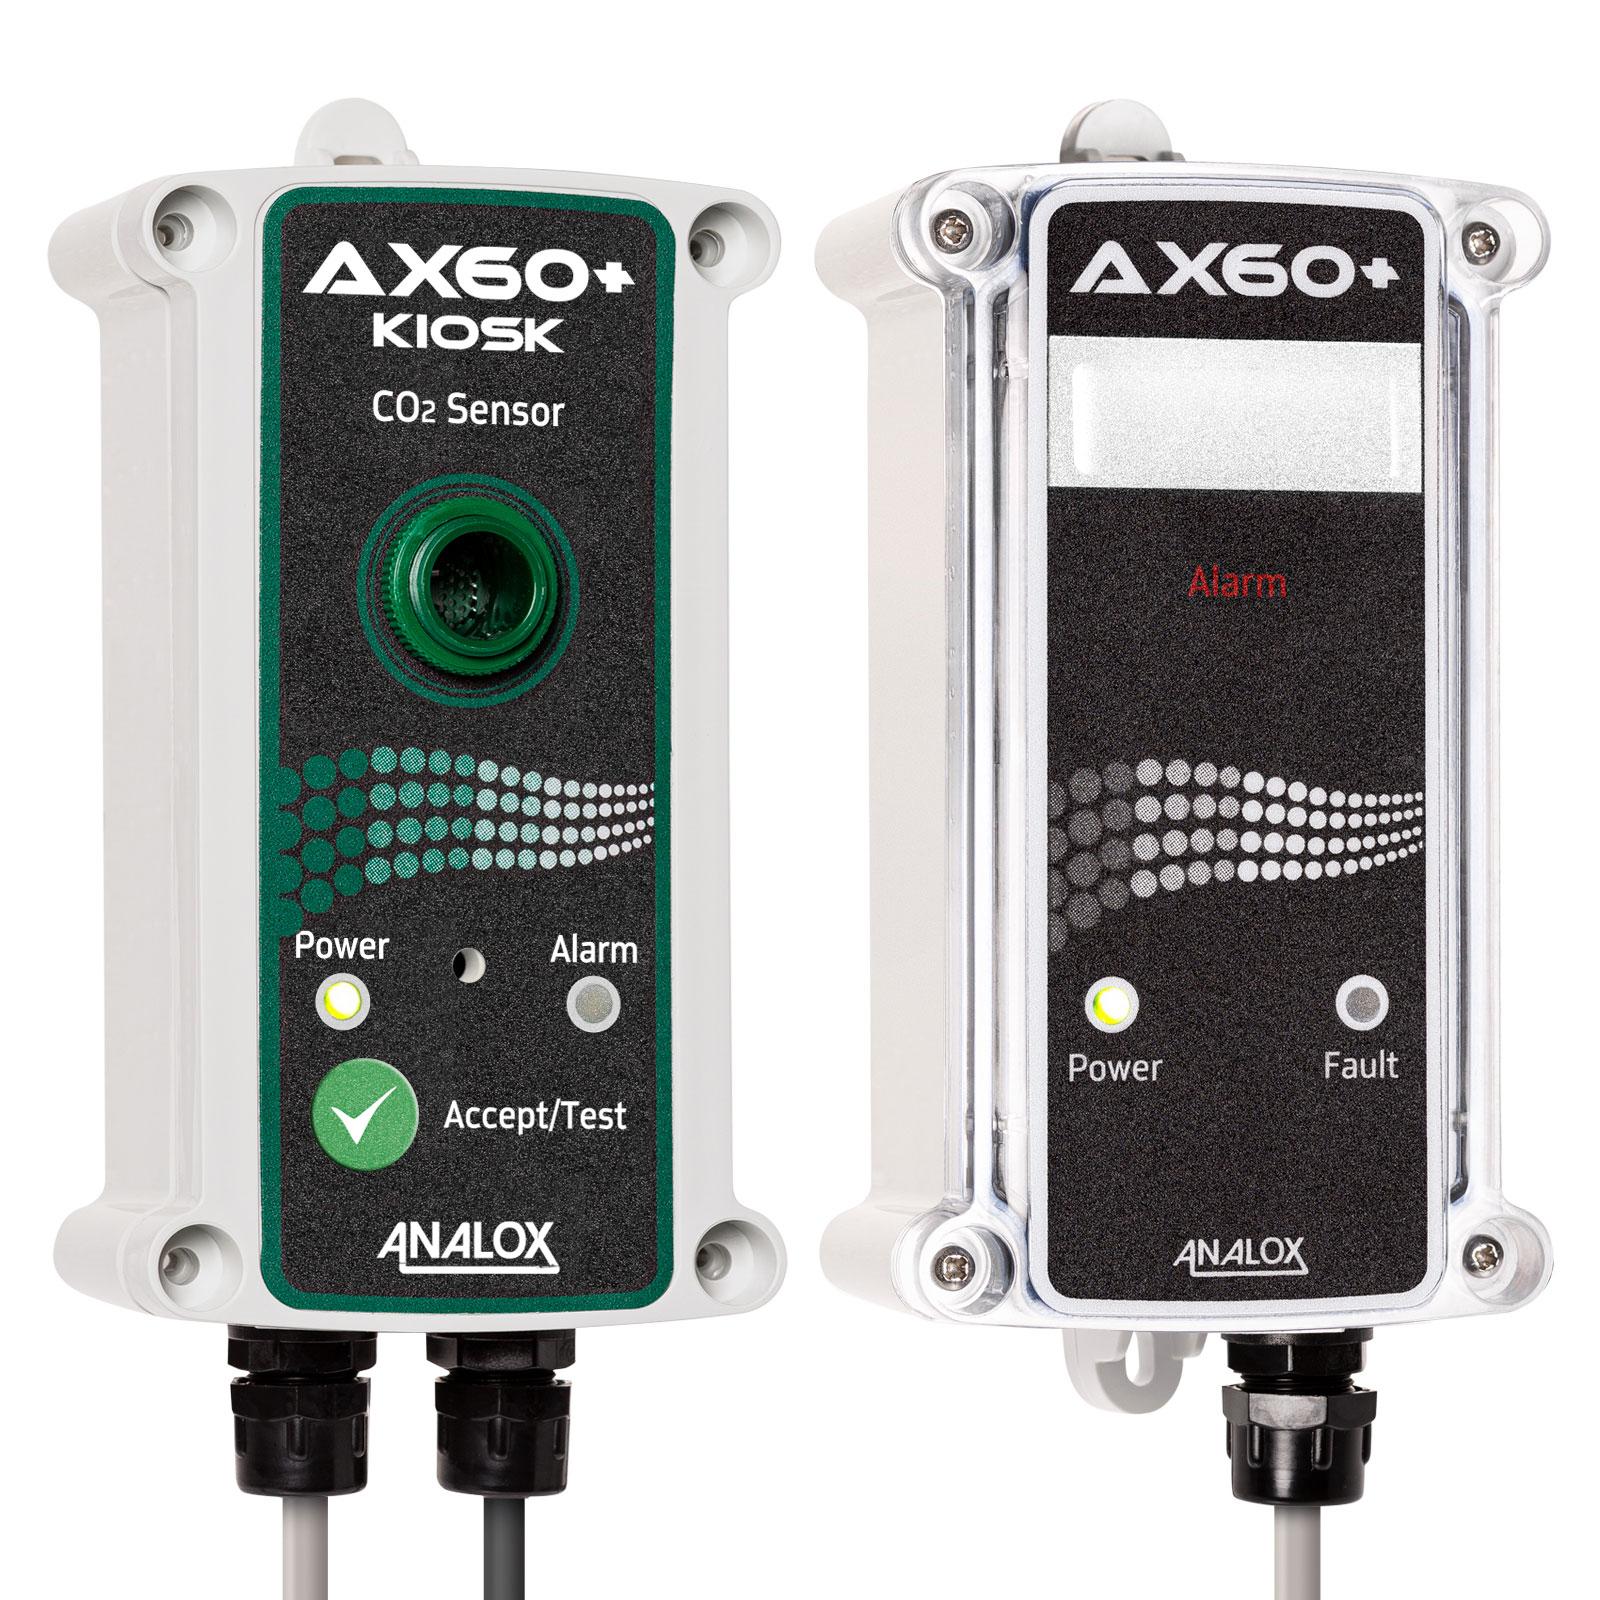 AX60+ Kiosk CO2 Sensor & Alarm